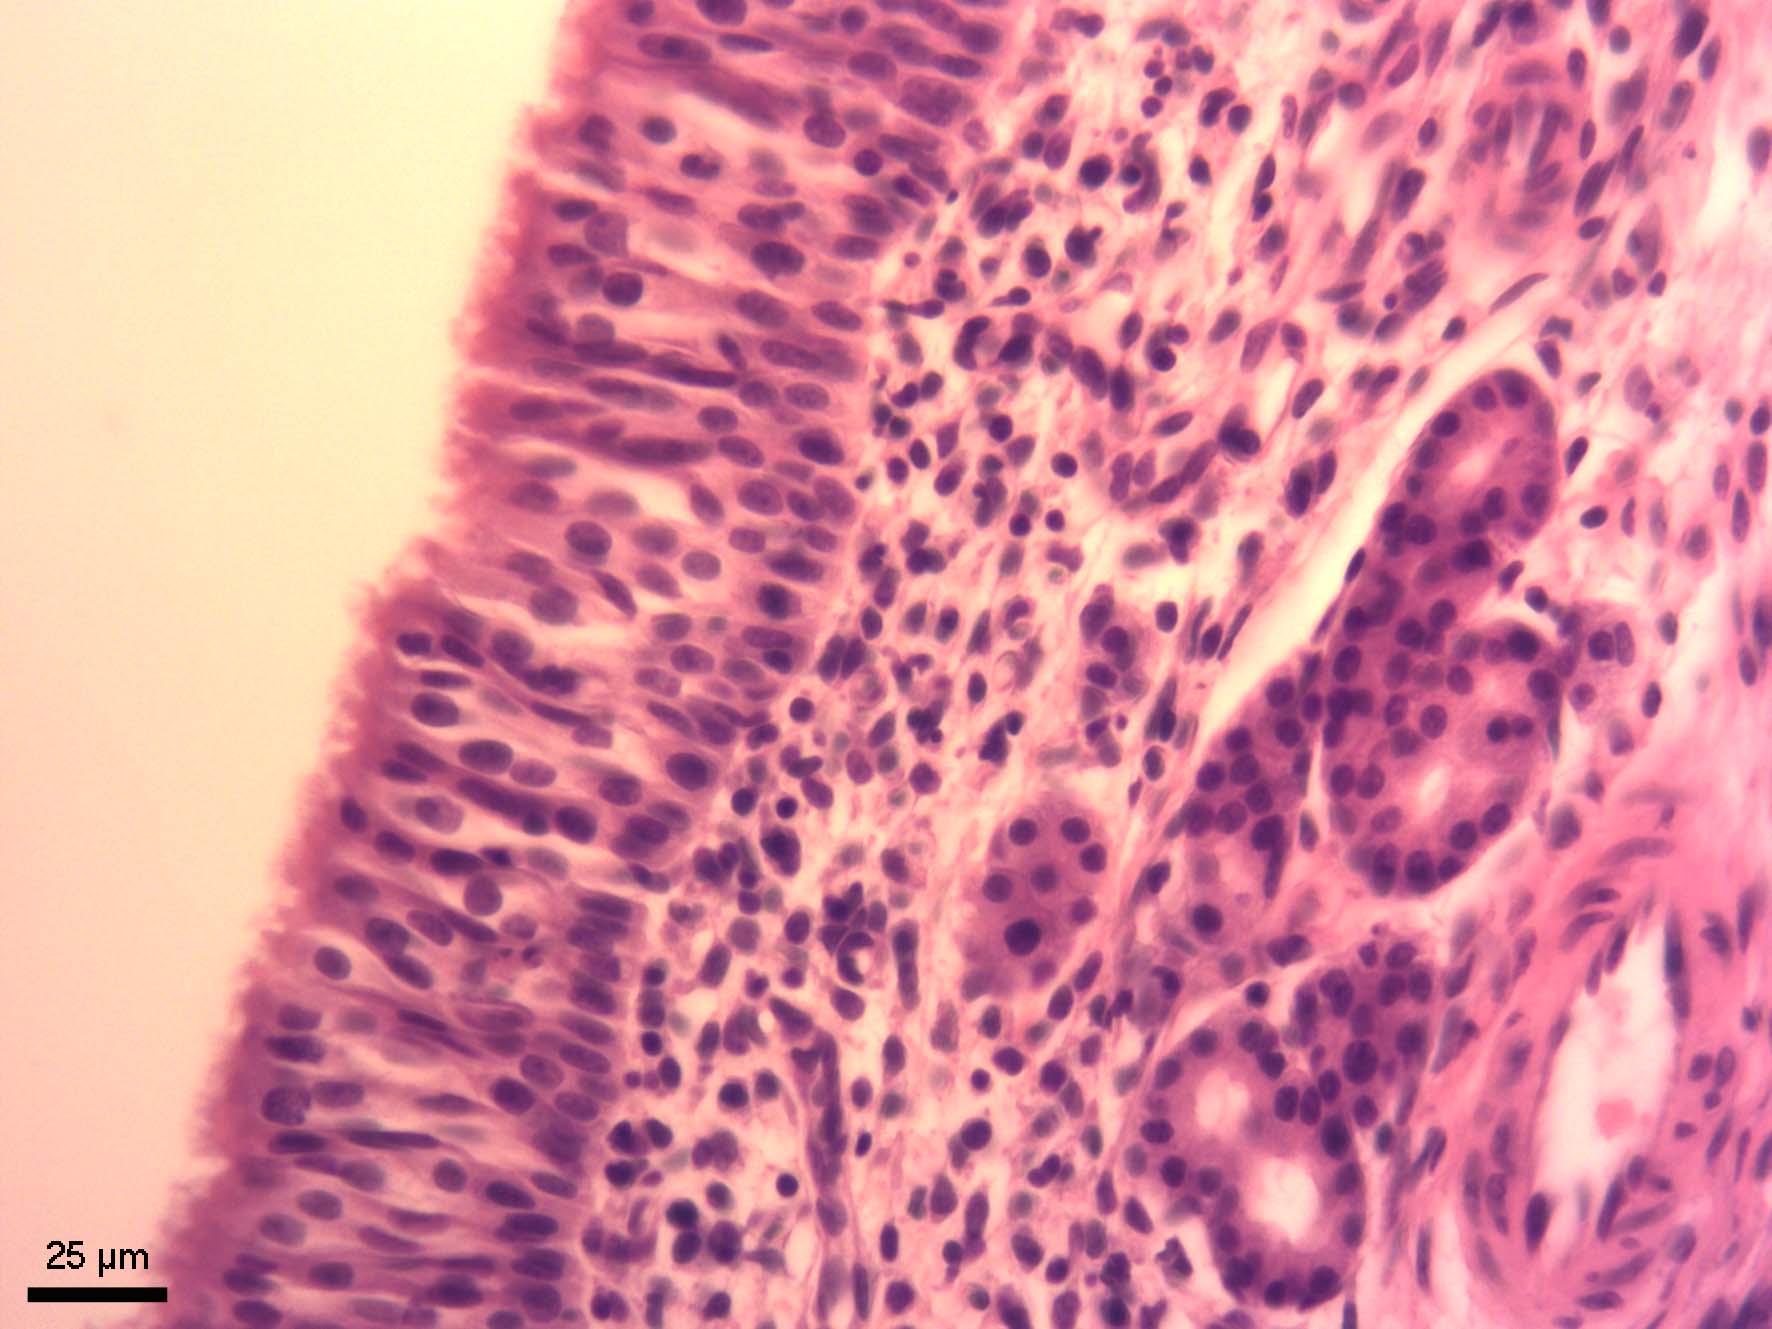 Čichový okrsek nosní sliznice (regio olfactoria tunicae mucosae nasi)